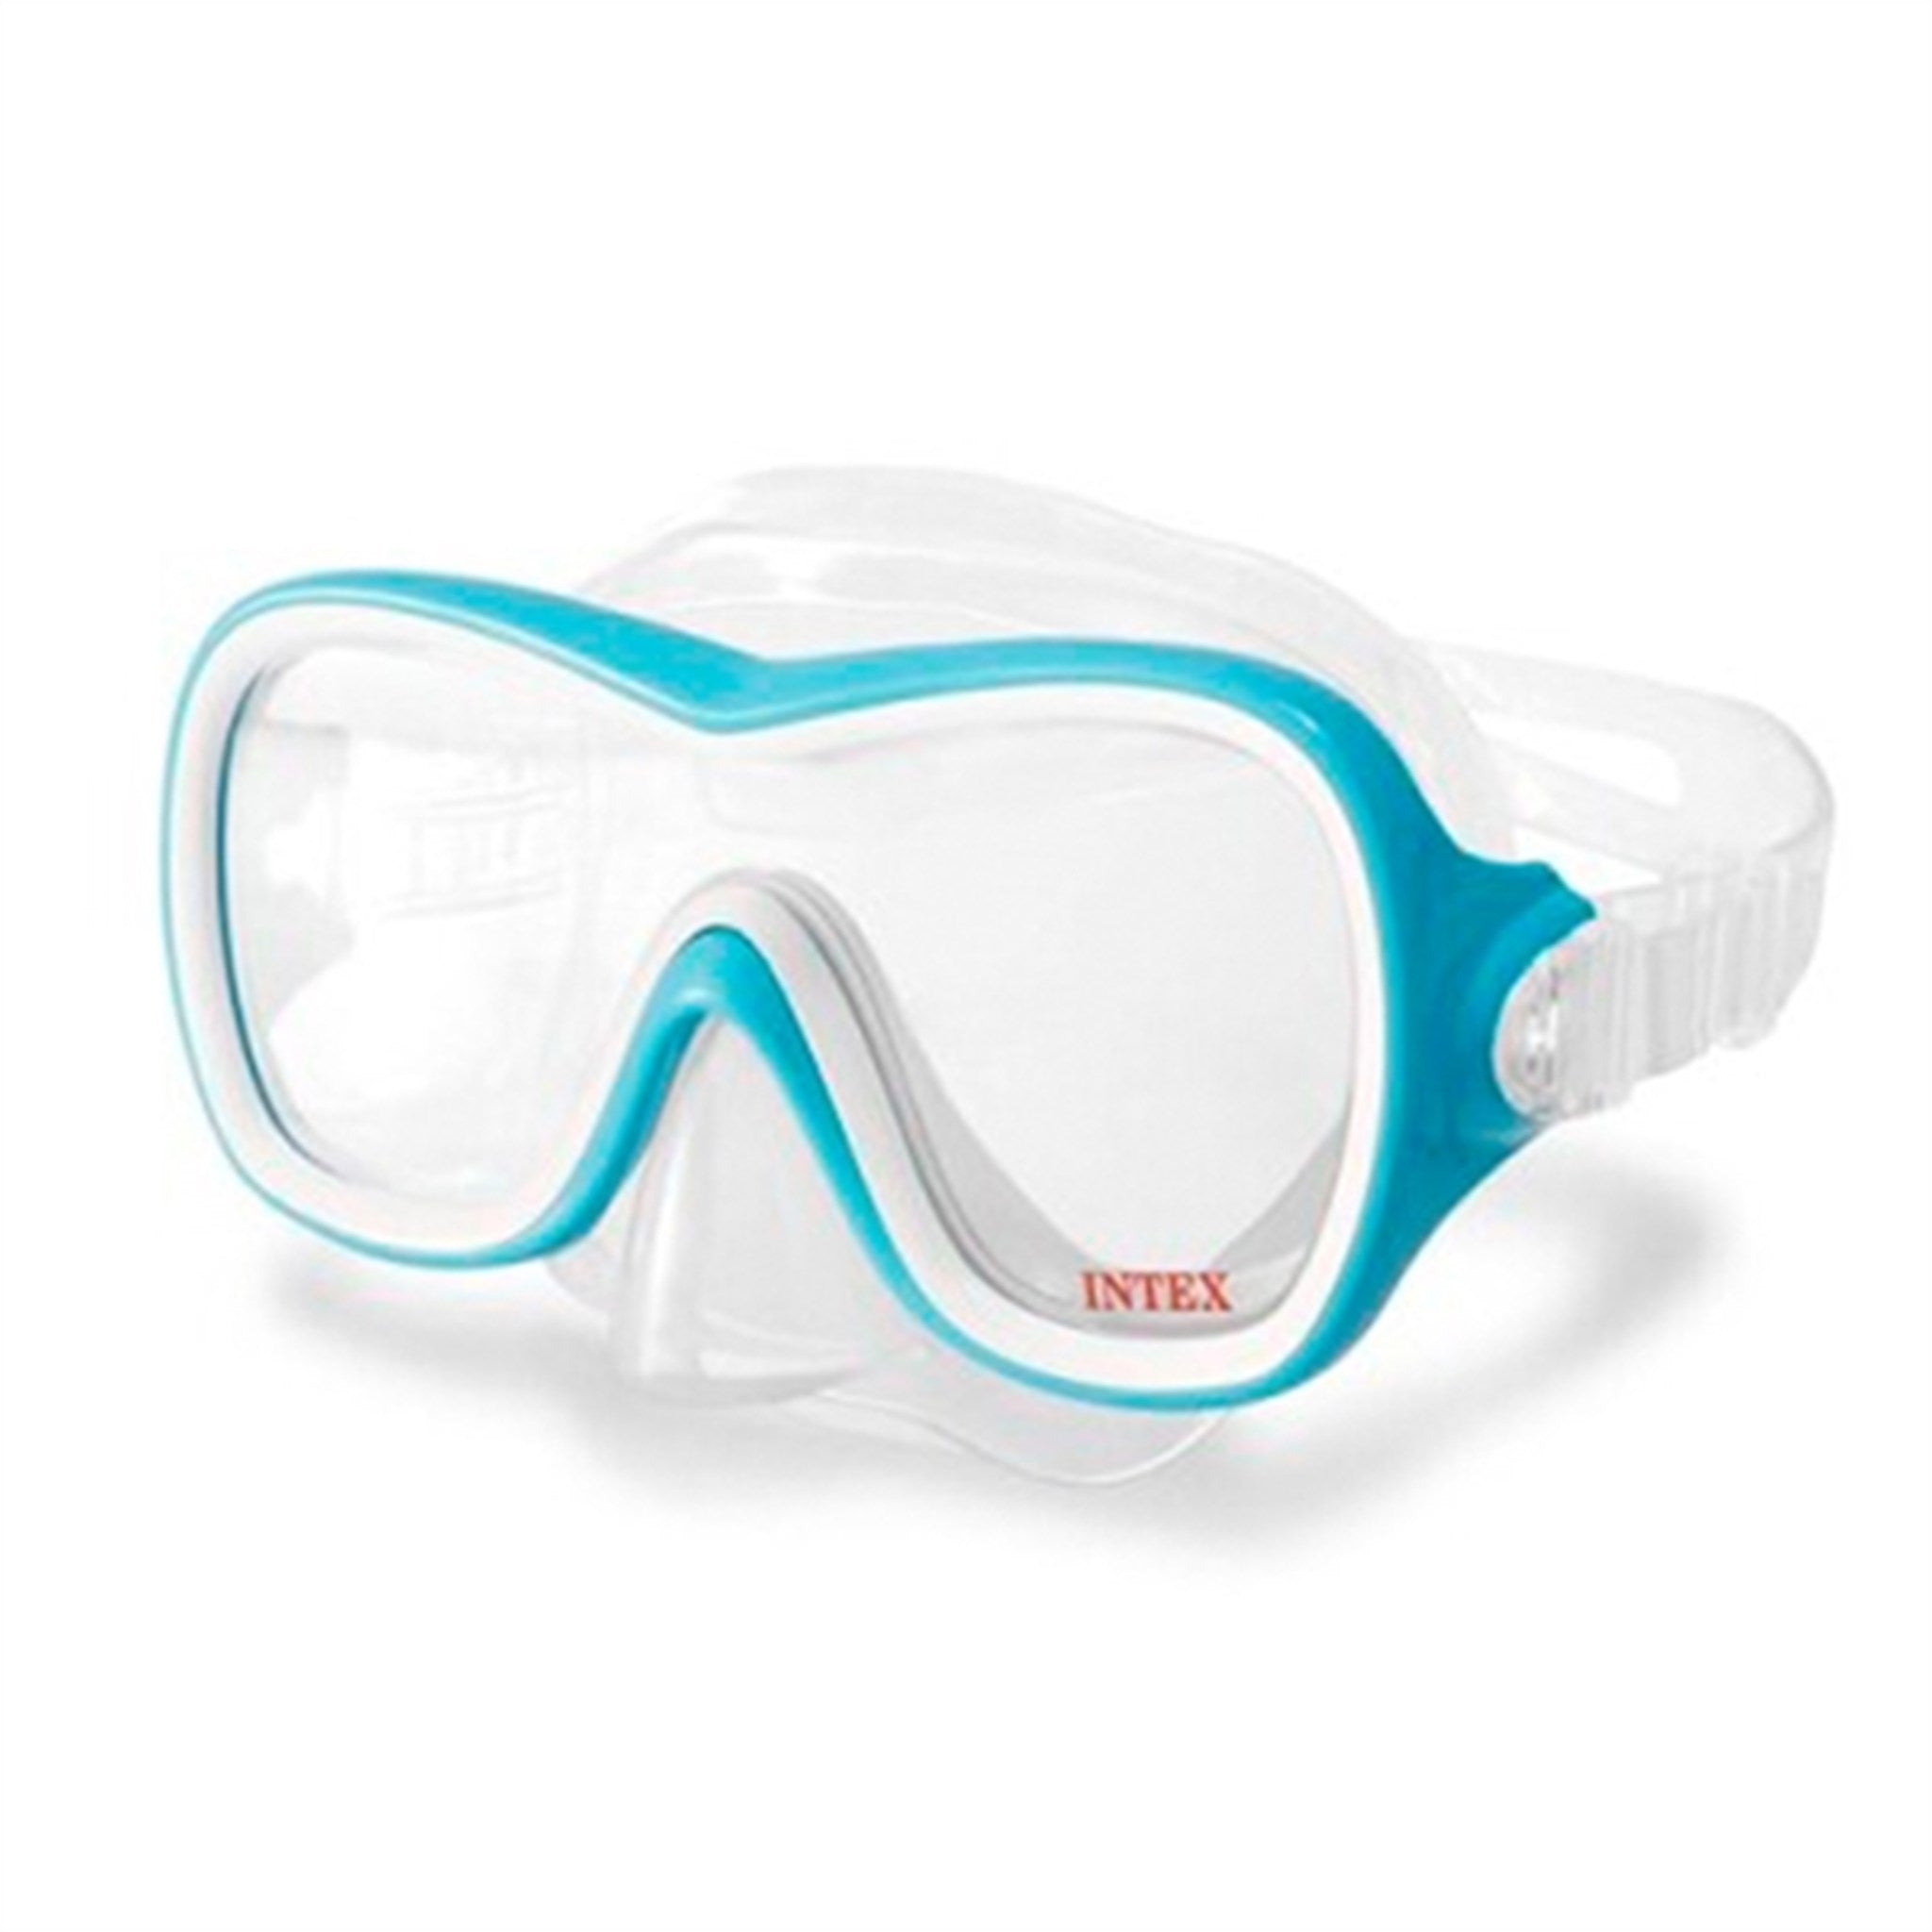 INTEX® Wave Rider Mask Blue